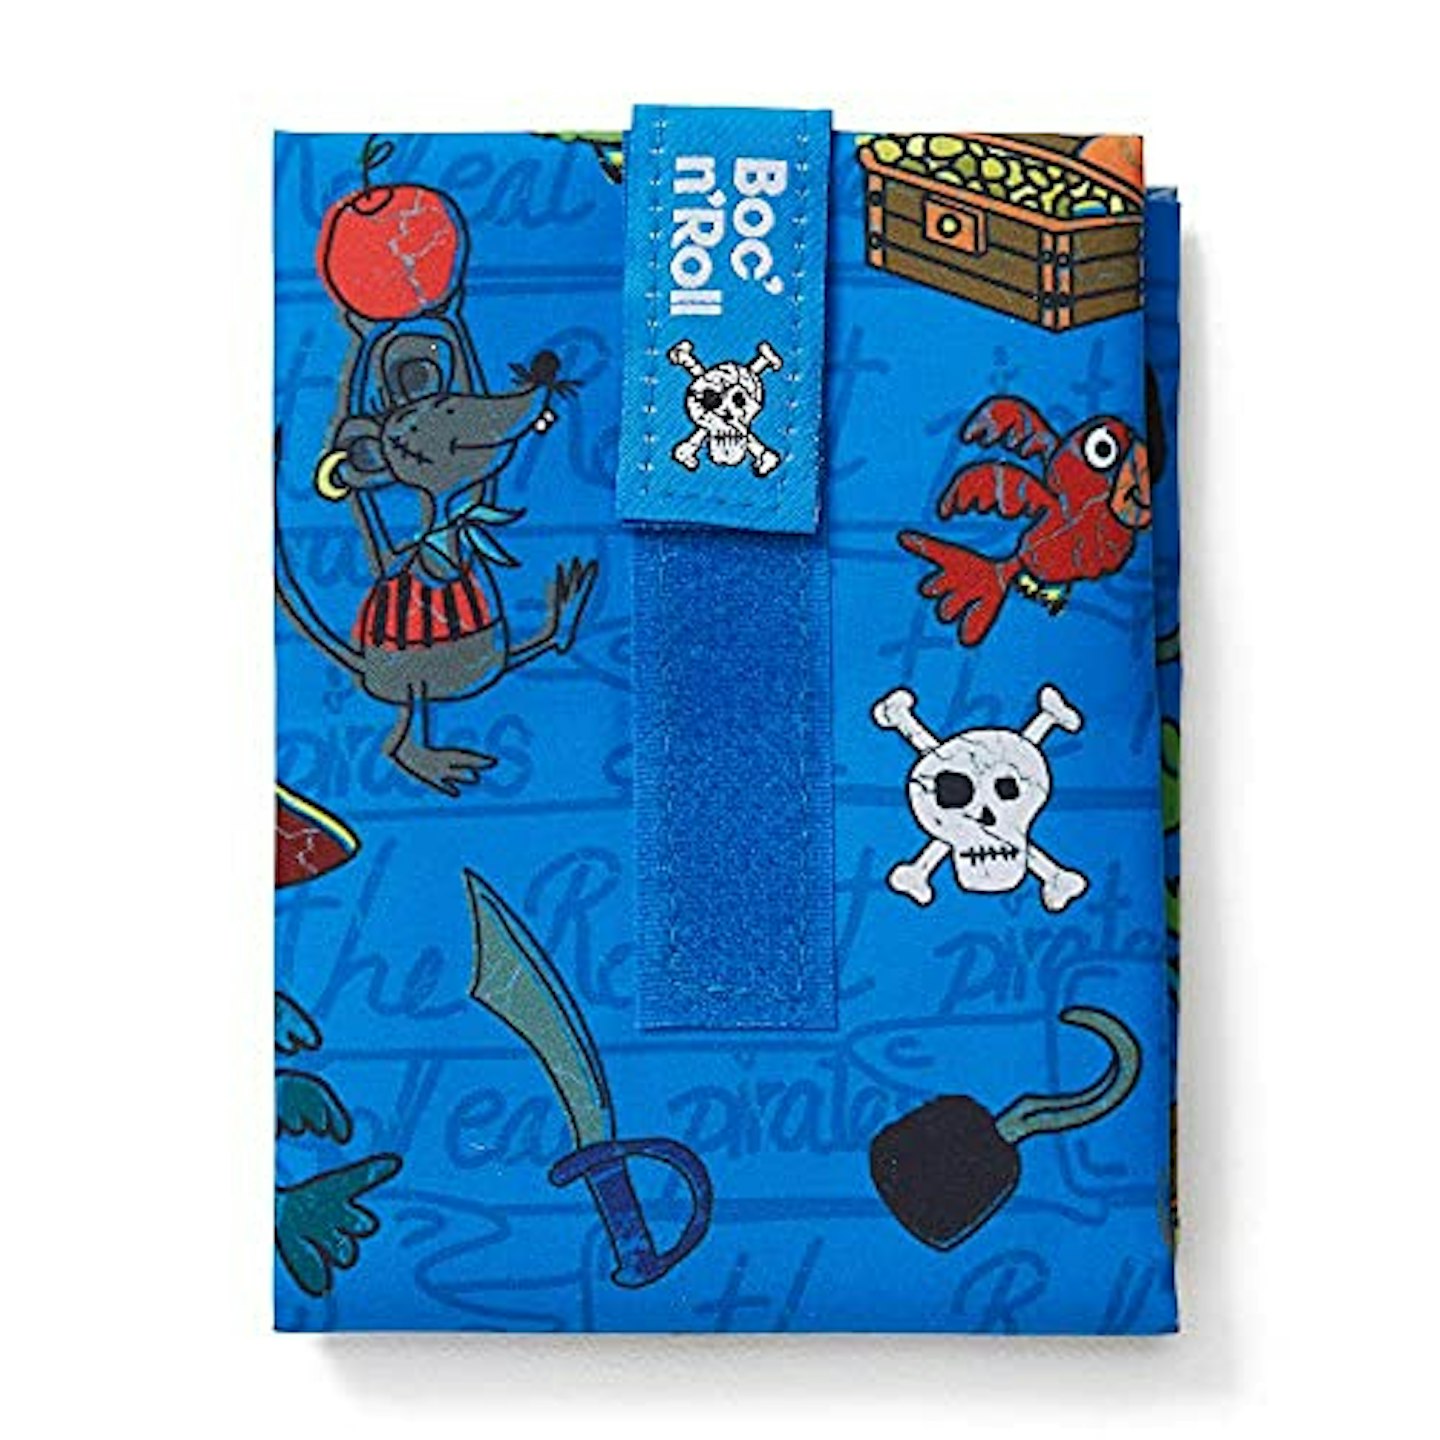 Reusable snack bags by Nom Nom Kids - 4 pack